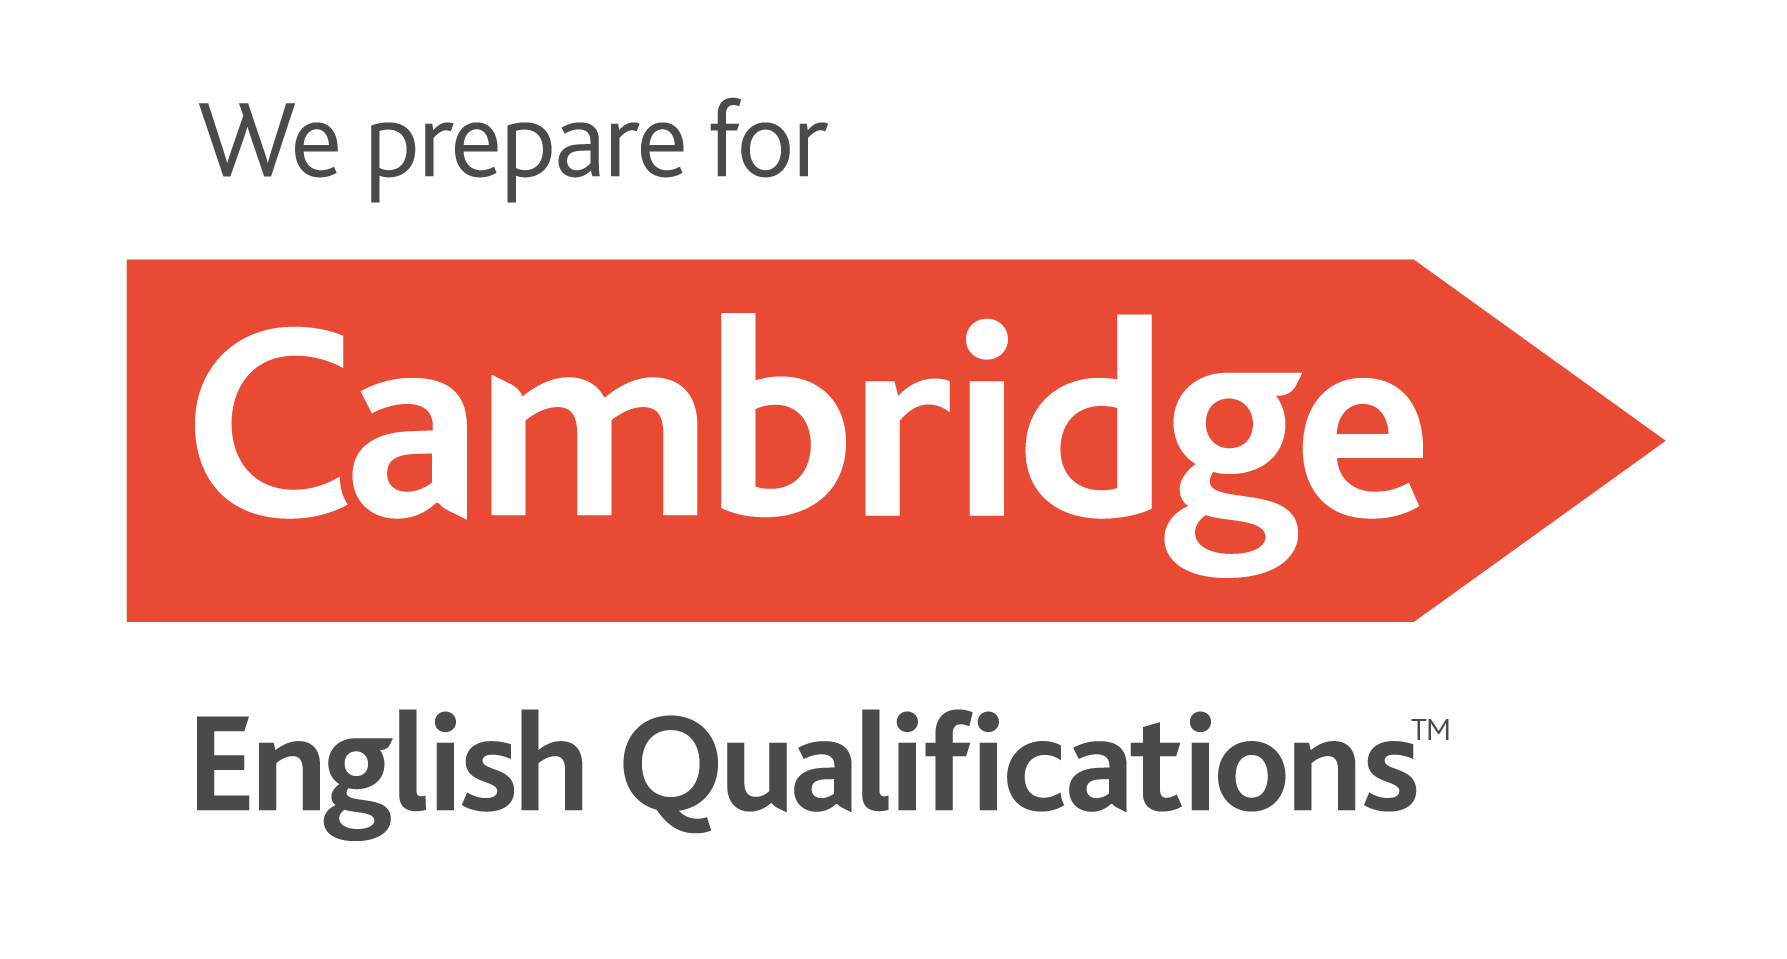 We prepare for Cambridge English Qualifications